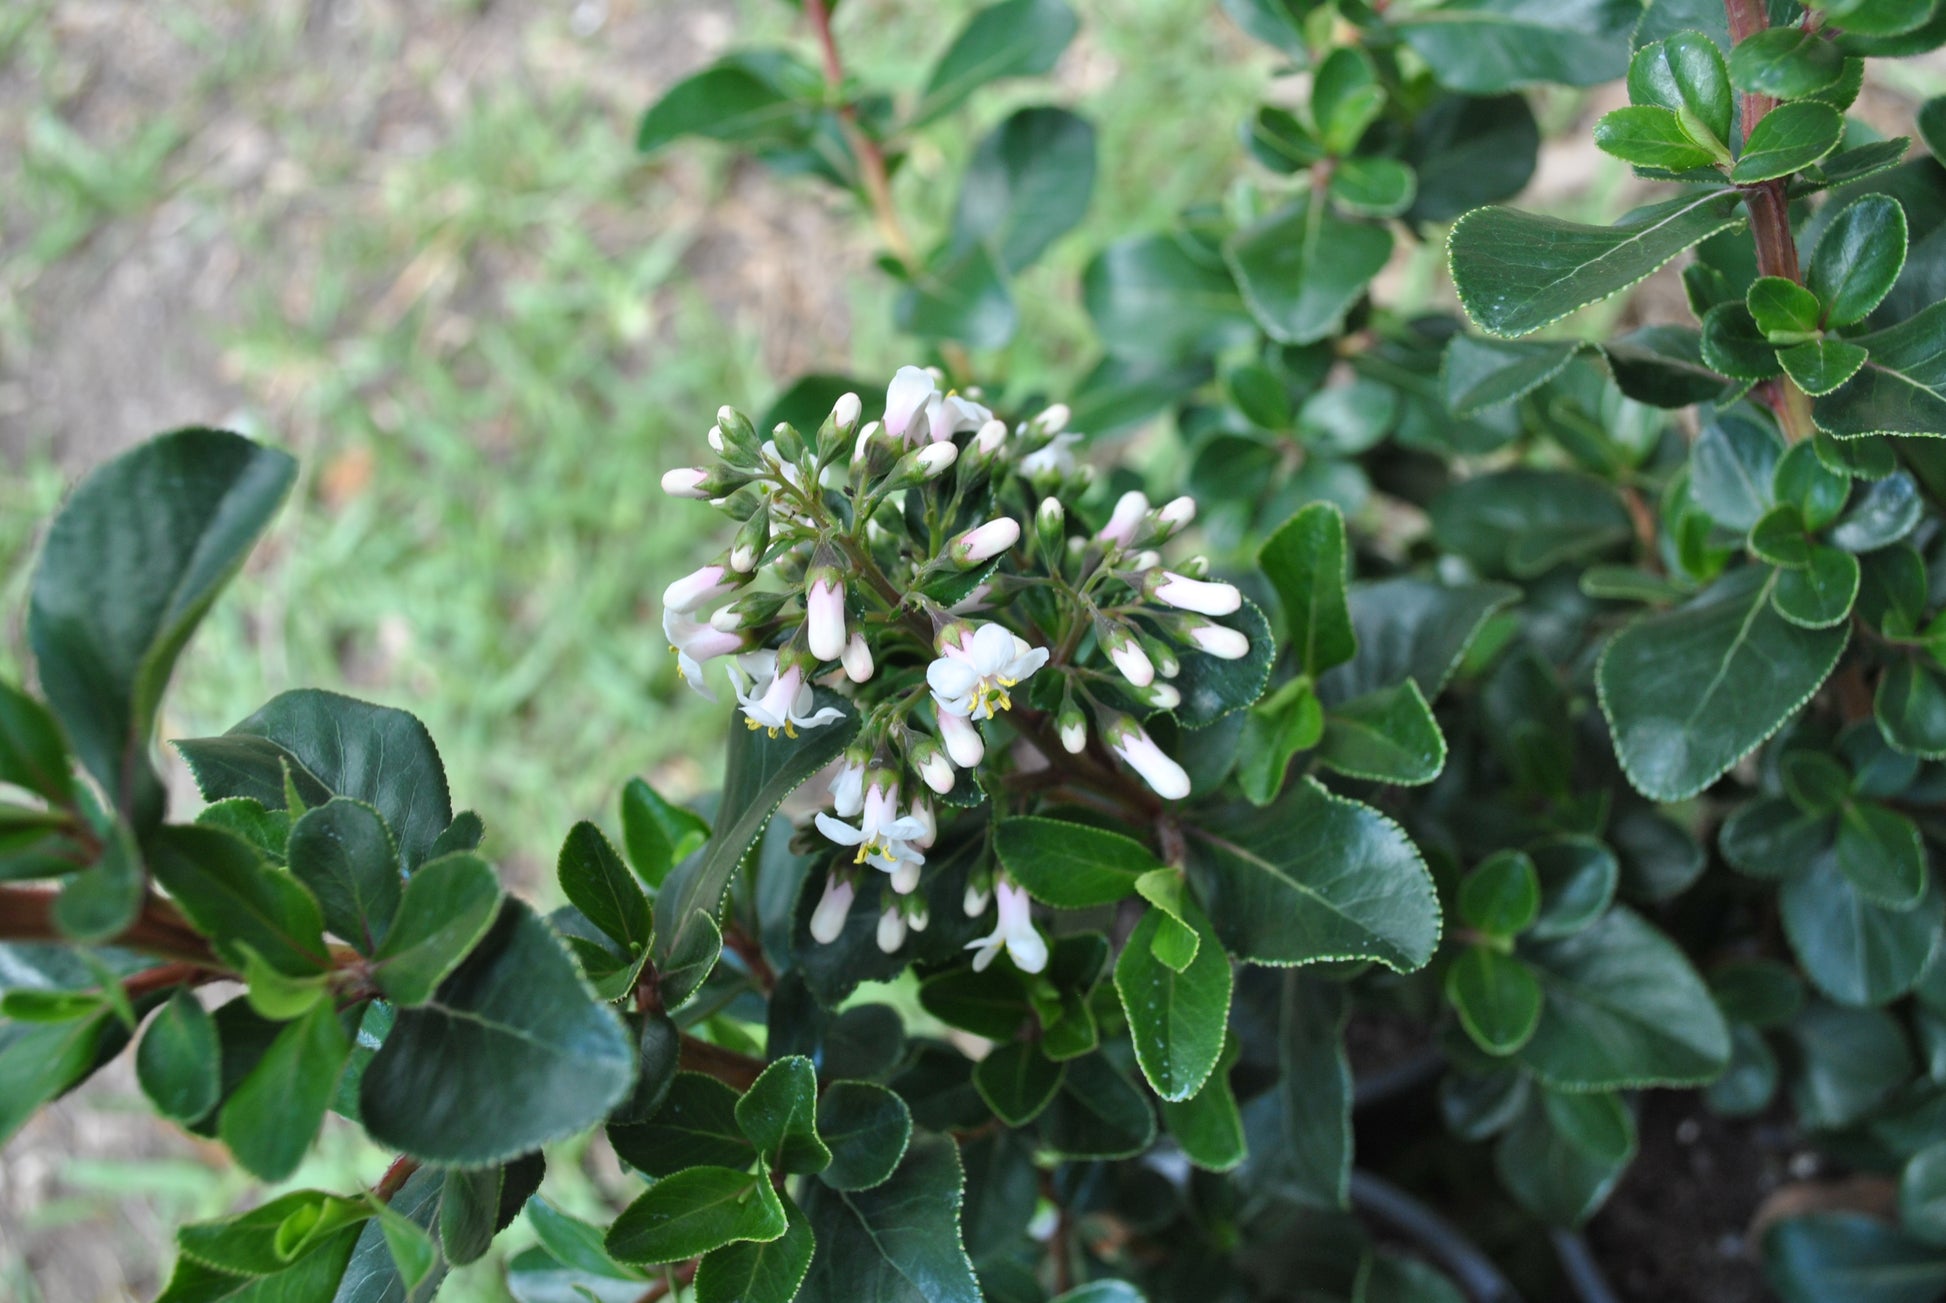 Close up of the delicate white flowers on Escallonia Iveyi 'White Escallonia'